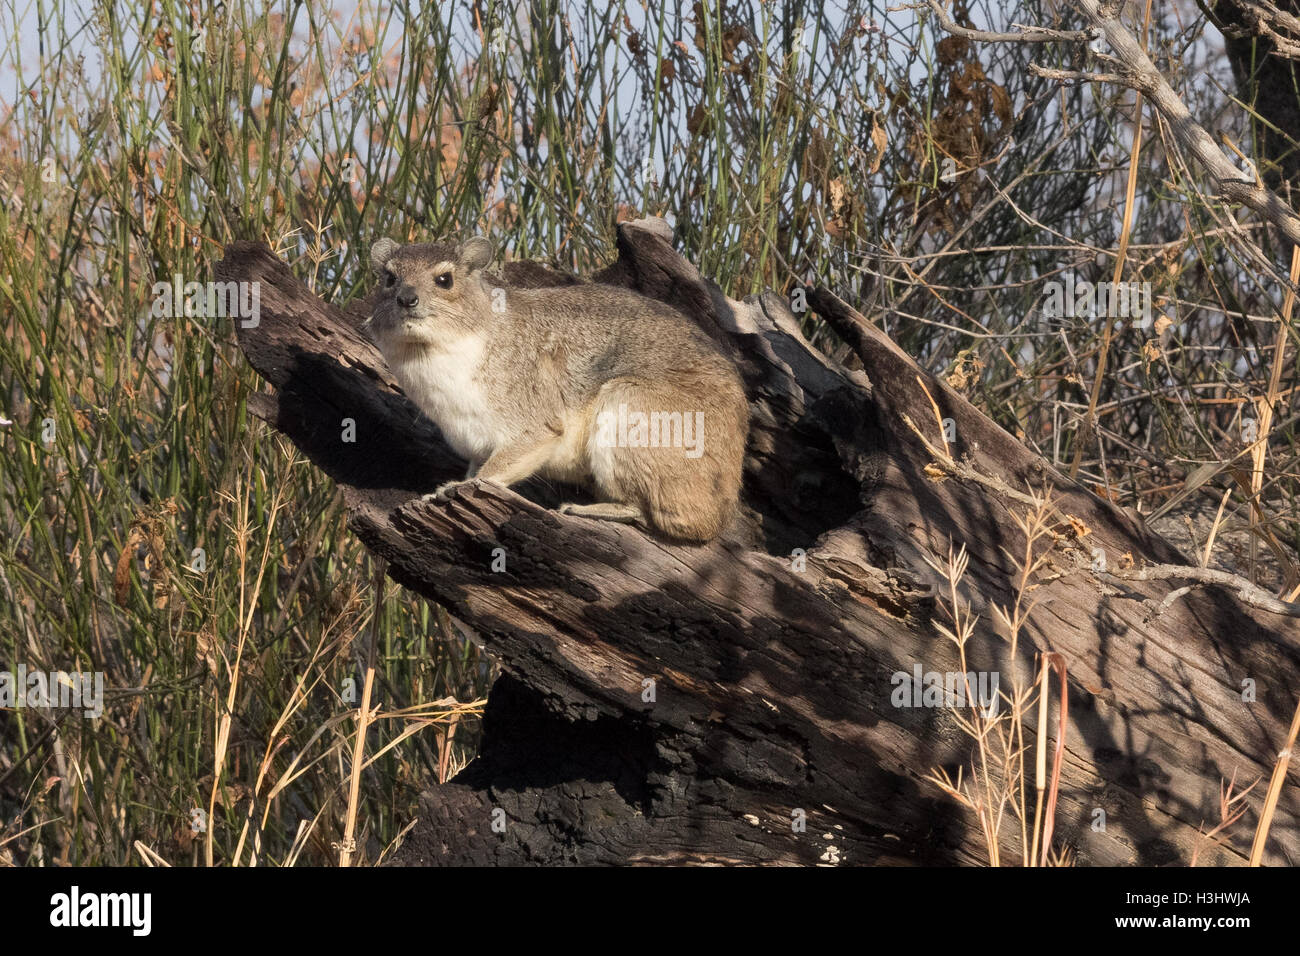 Tree hyrax sitting on a log Stock Photo